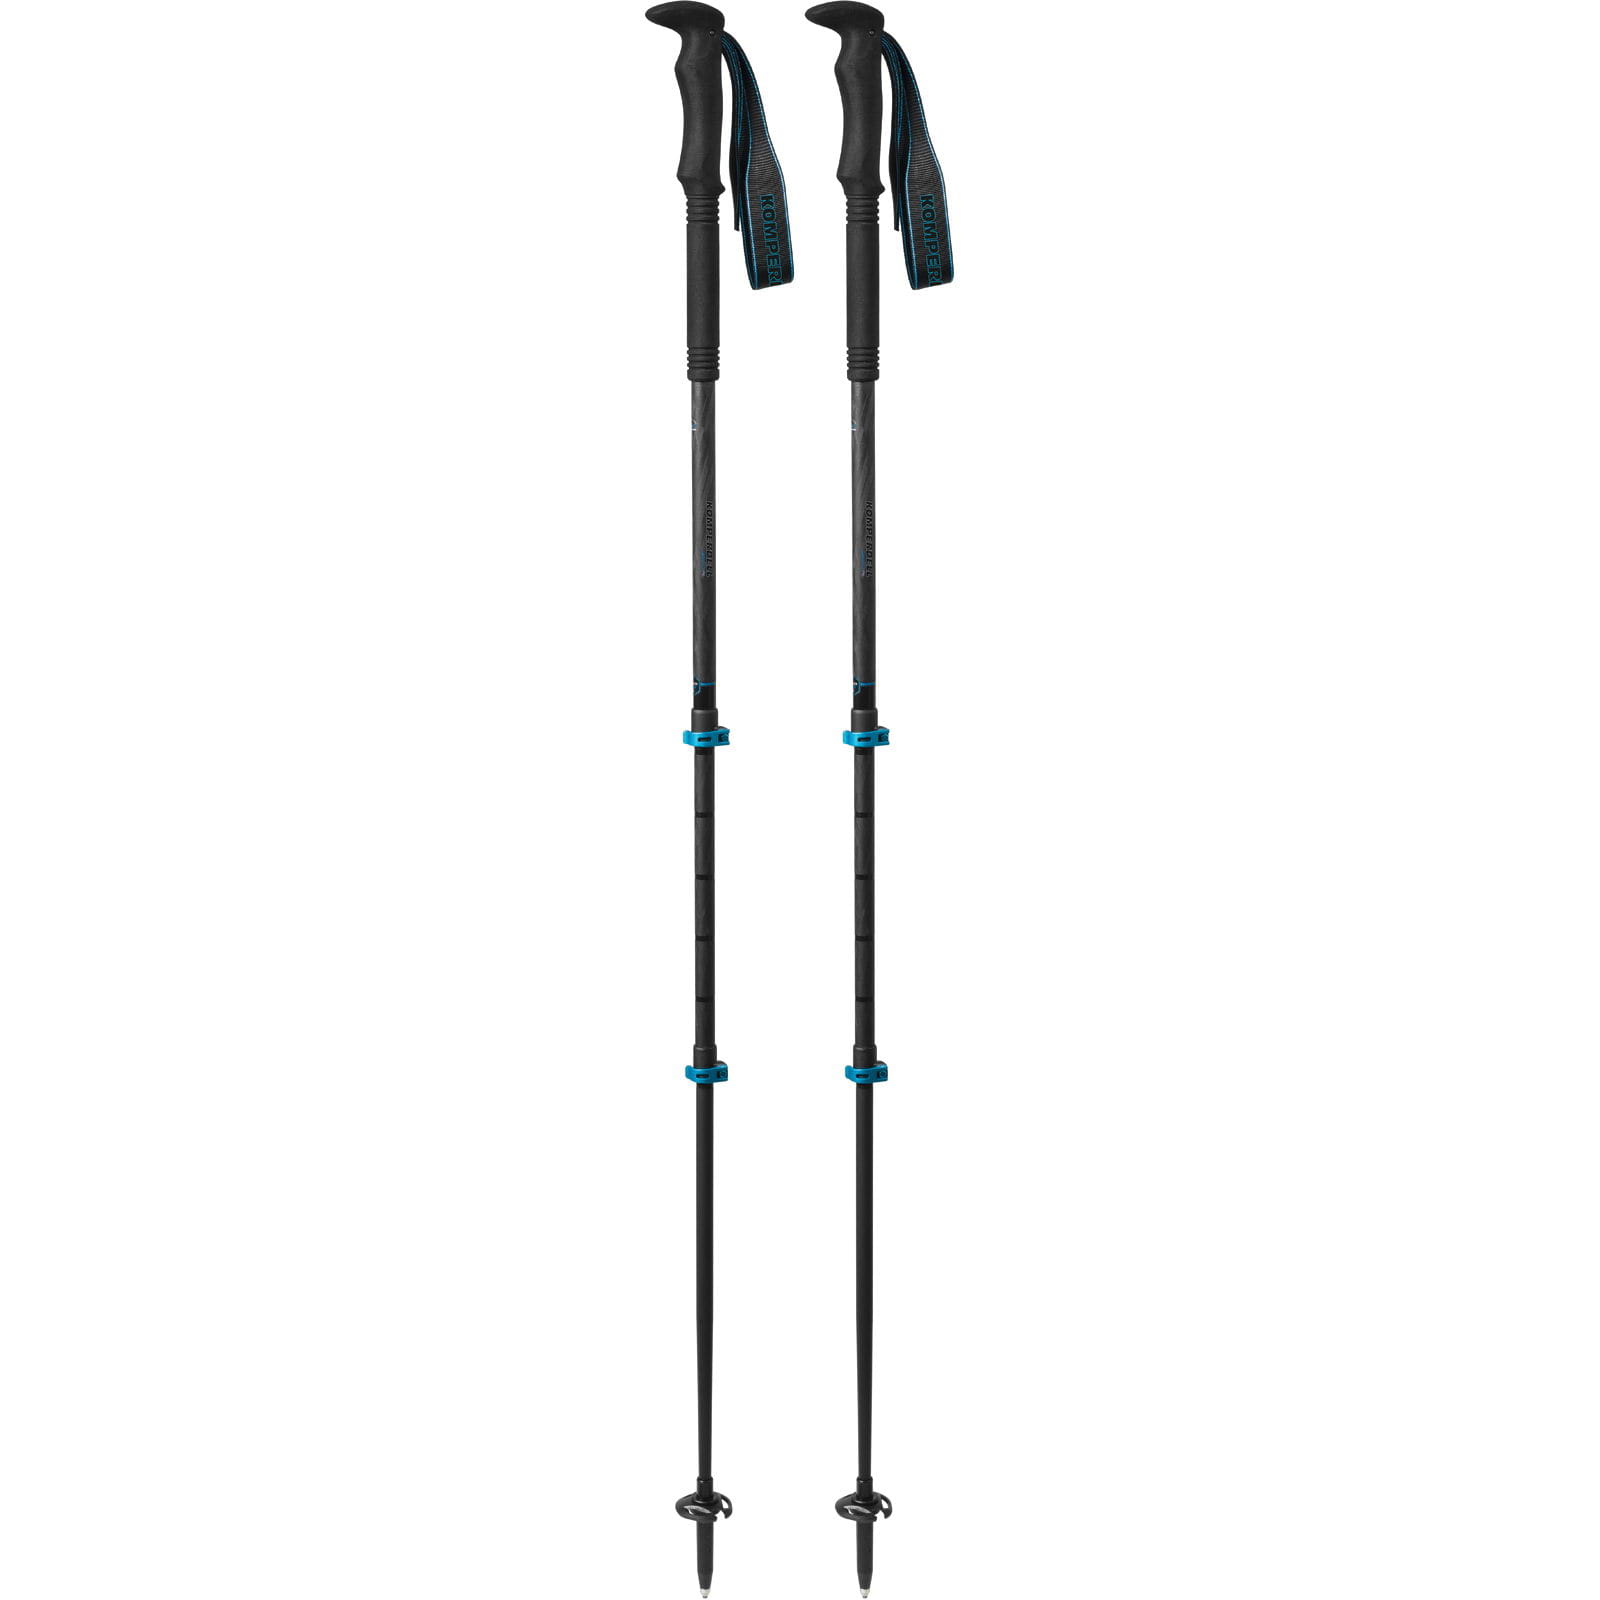 Komperdell Carbon C3 Pro Compact - Walking poles